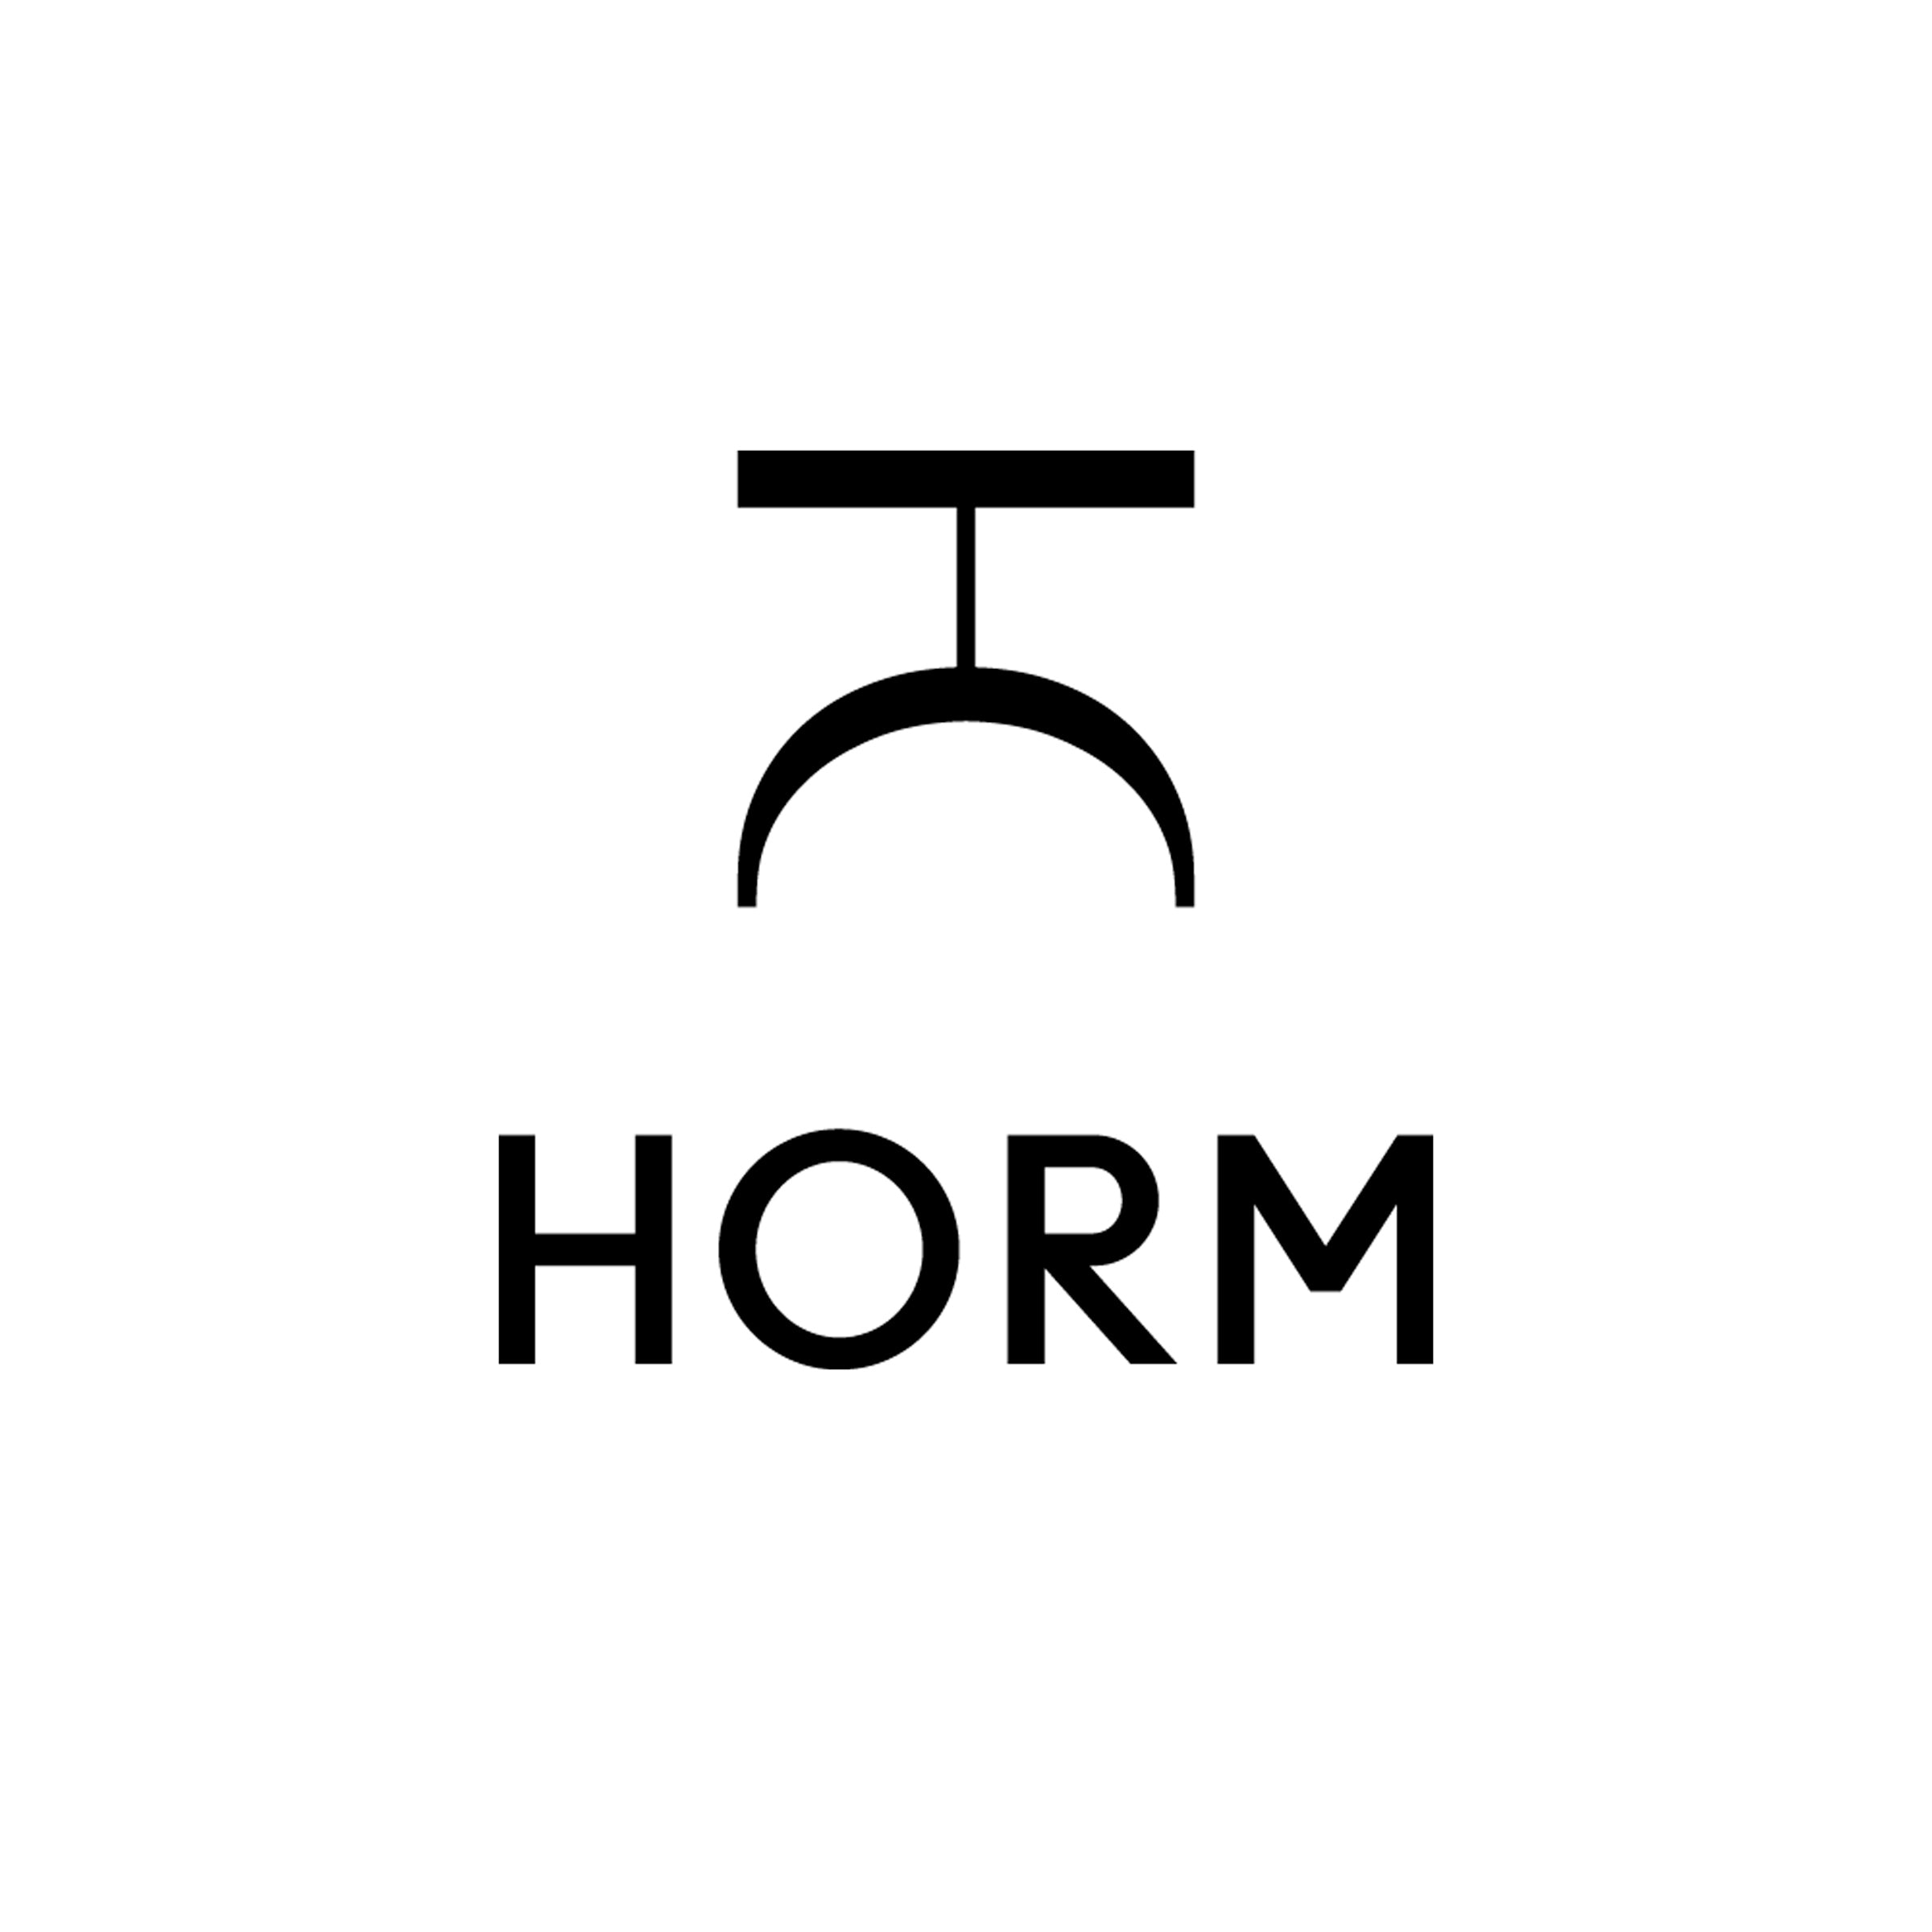 Shop Horm- an Italian designer furniture manufacturer